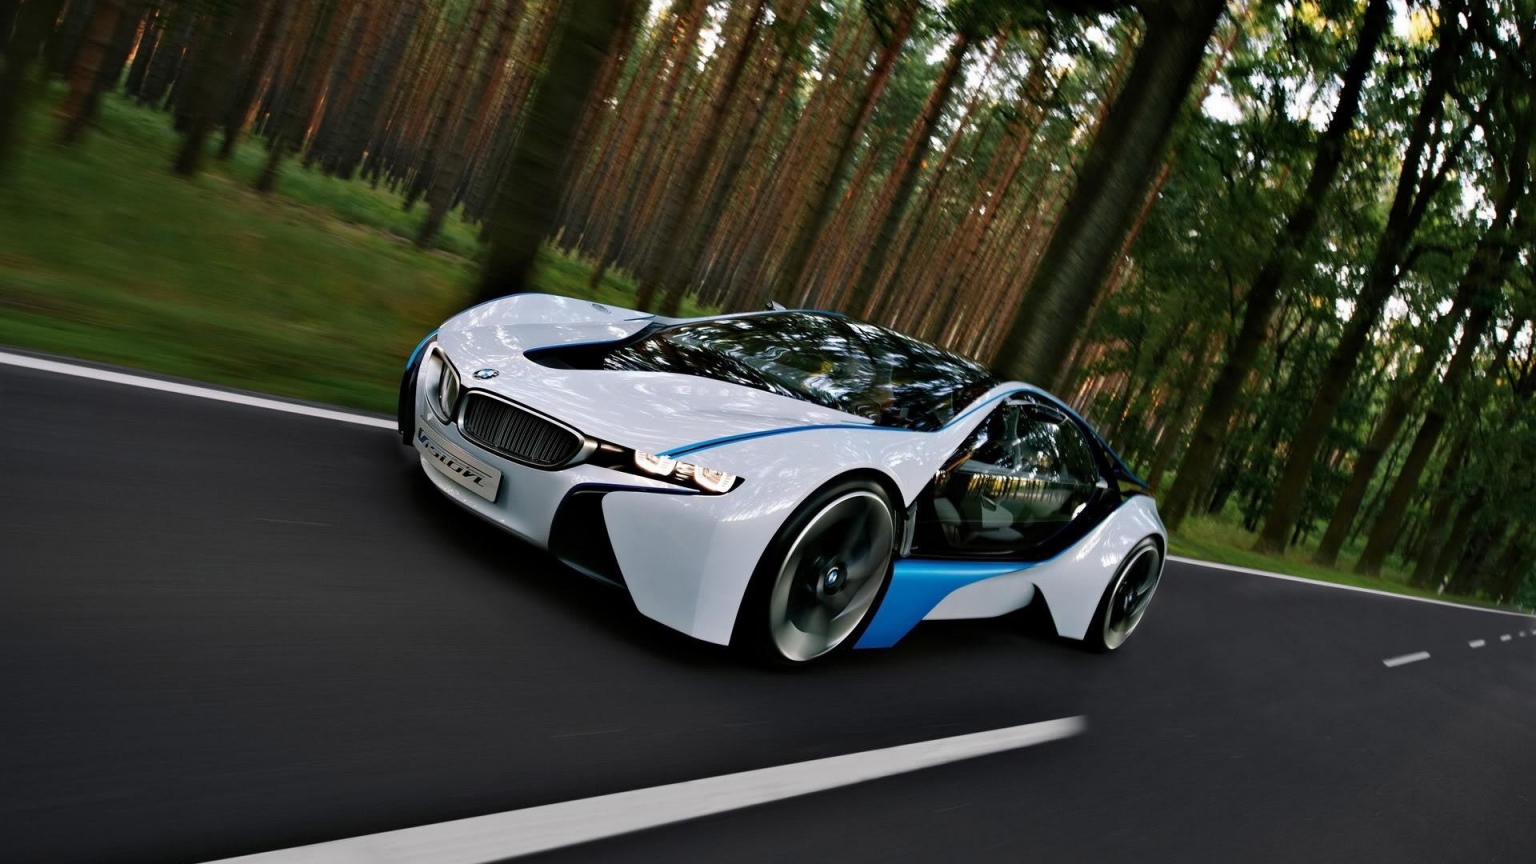 Superb BMW Vision Concept for 1536 x 864 HDTV resolution